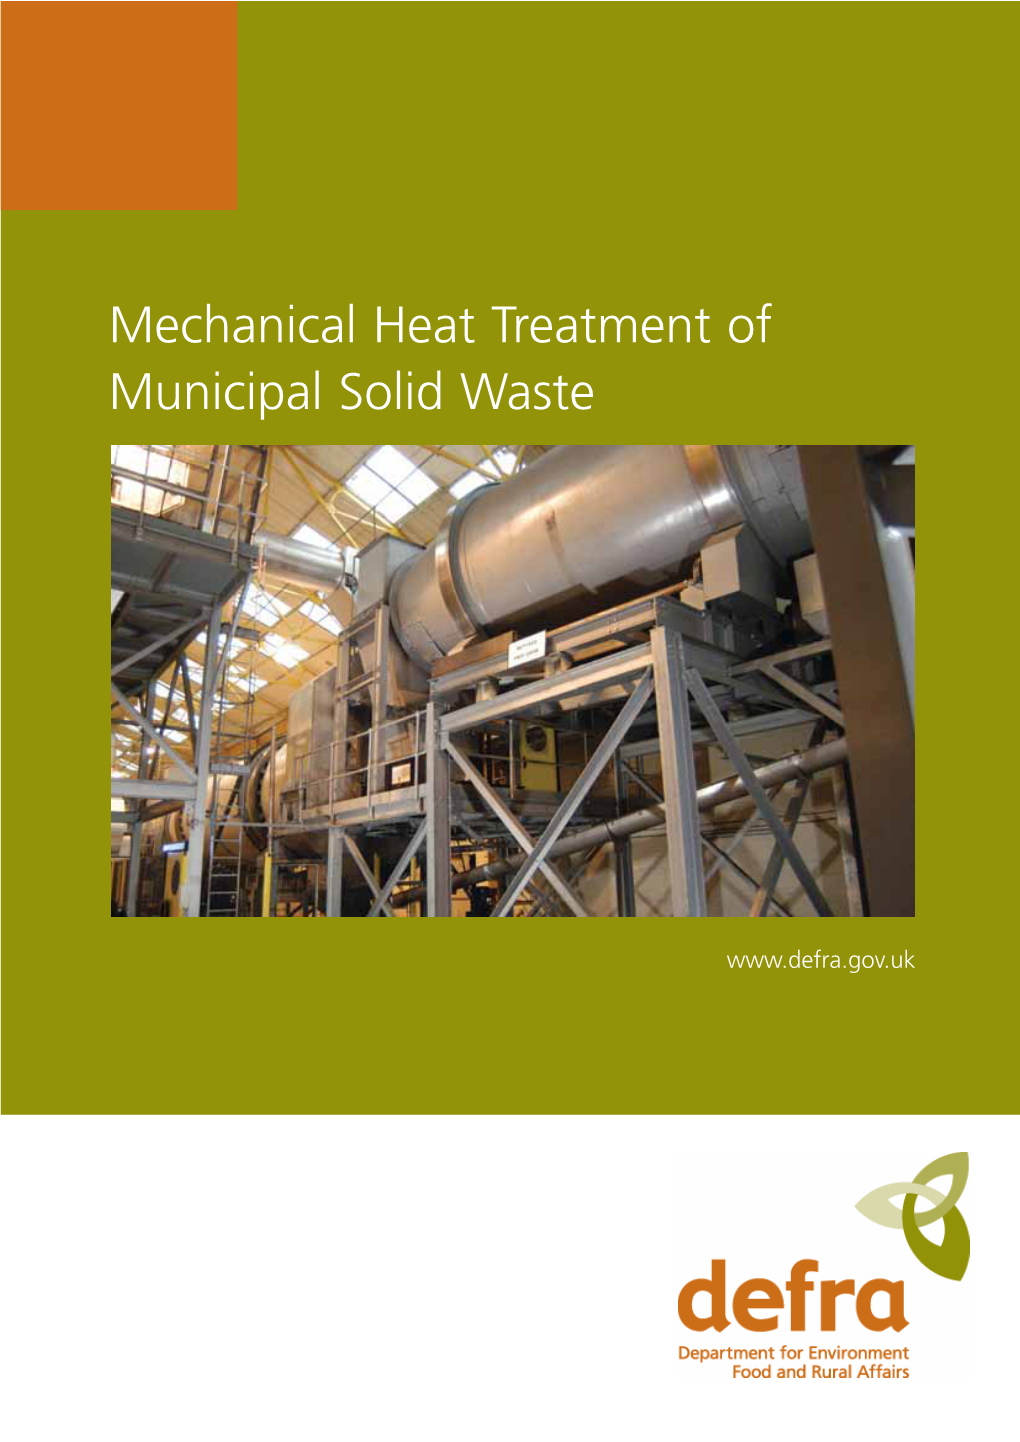 Mechanical Heat Treatment of Municipal Solid Waste